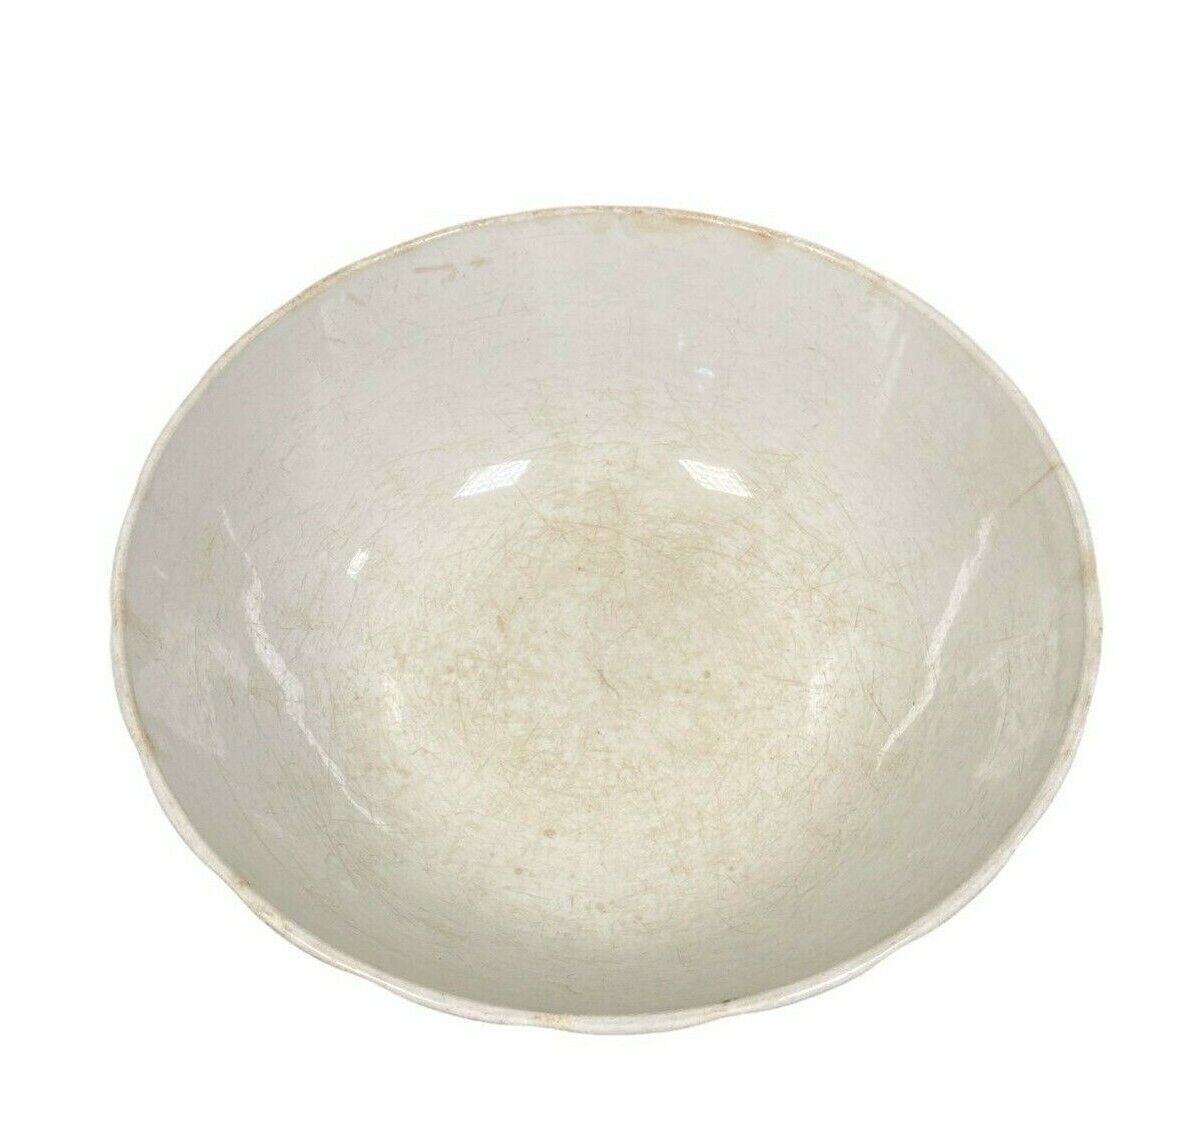 Ciotola in ceramica lombarda